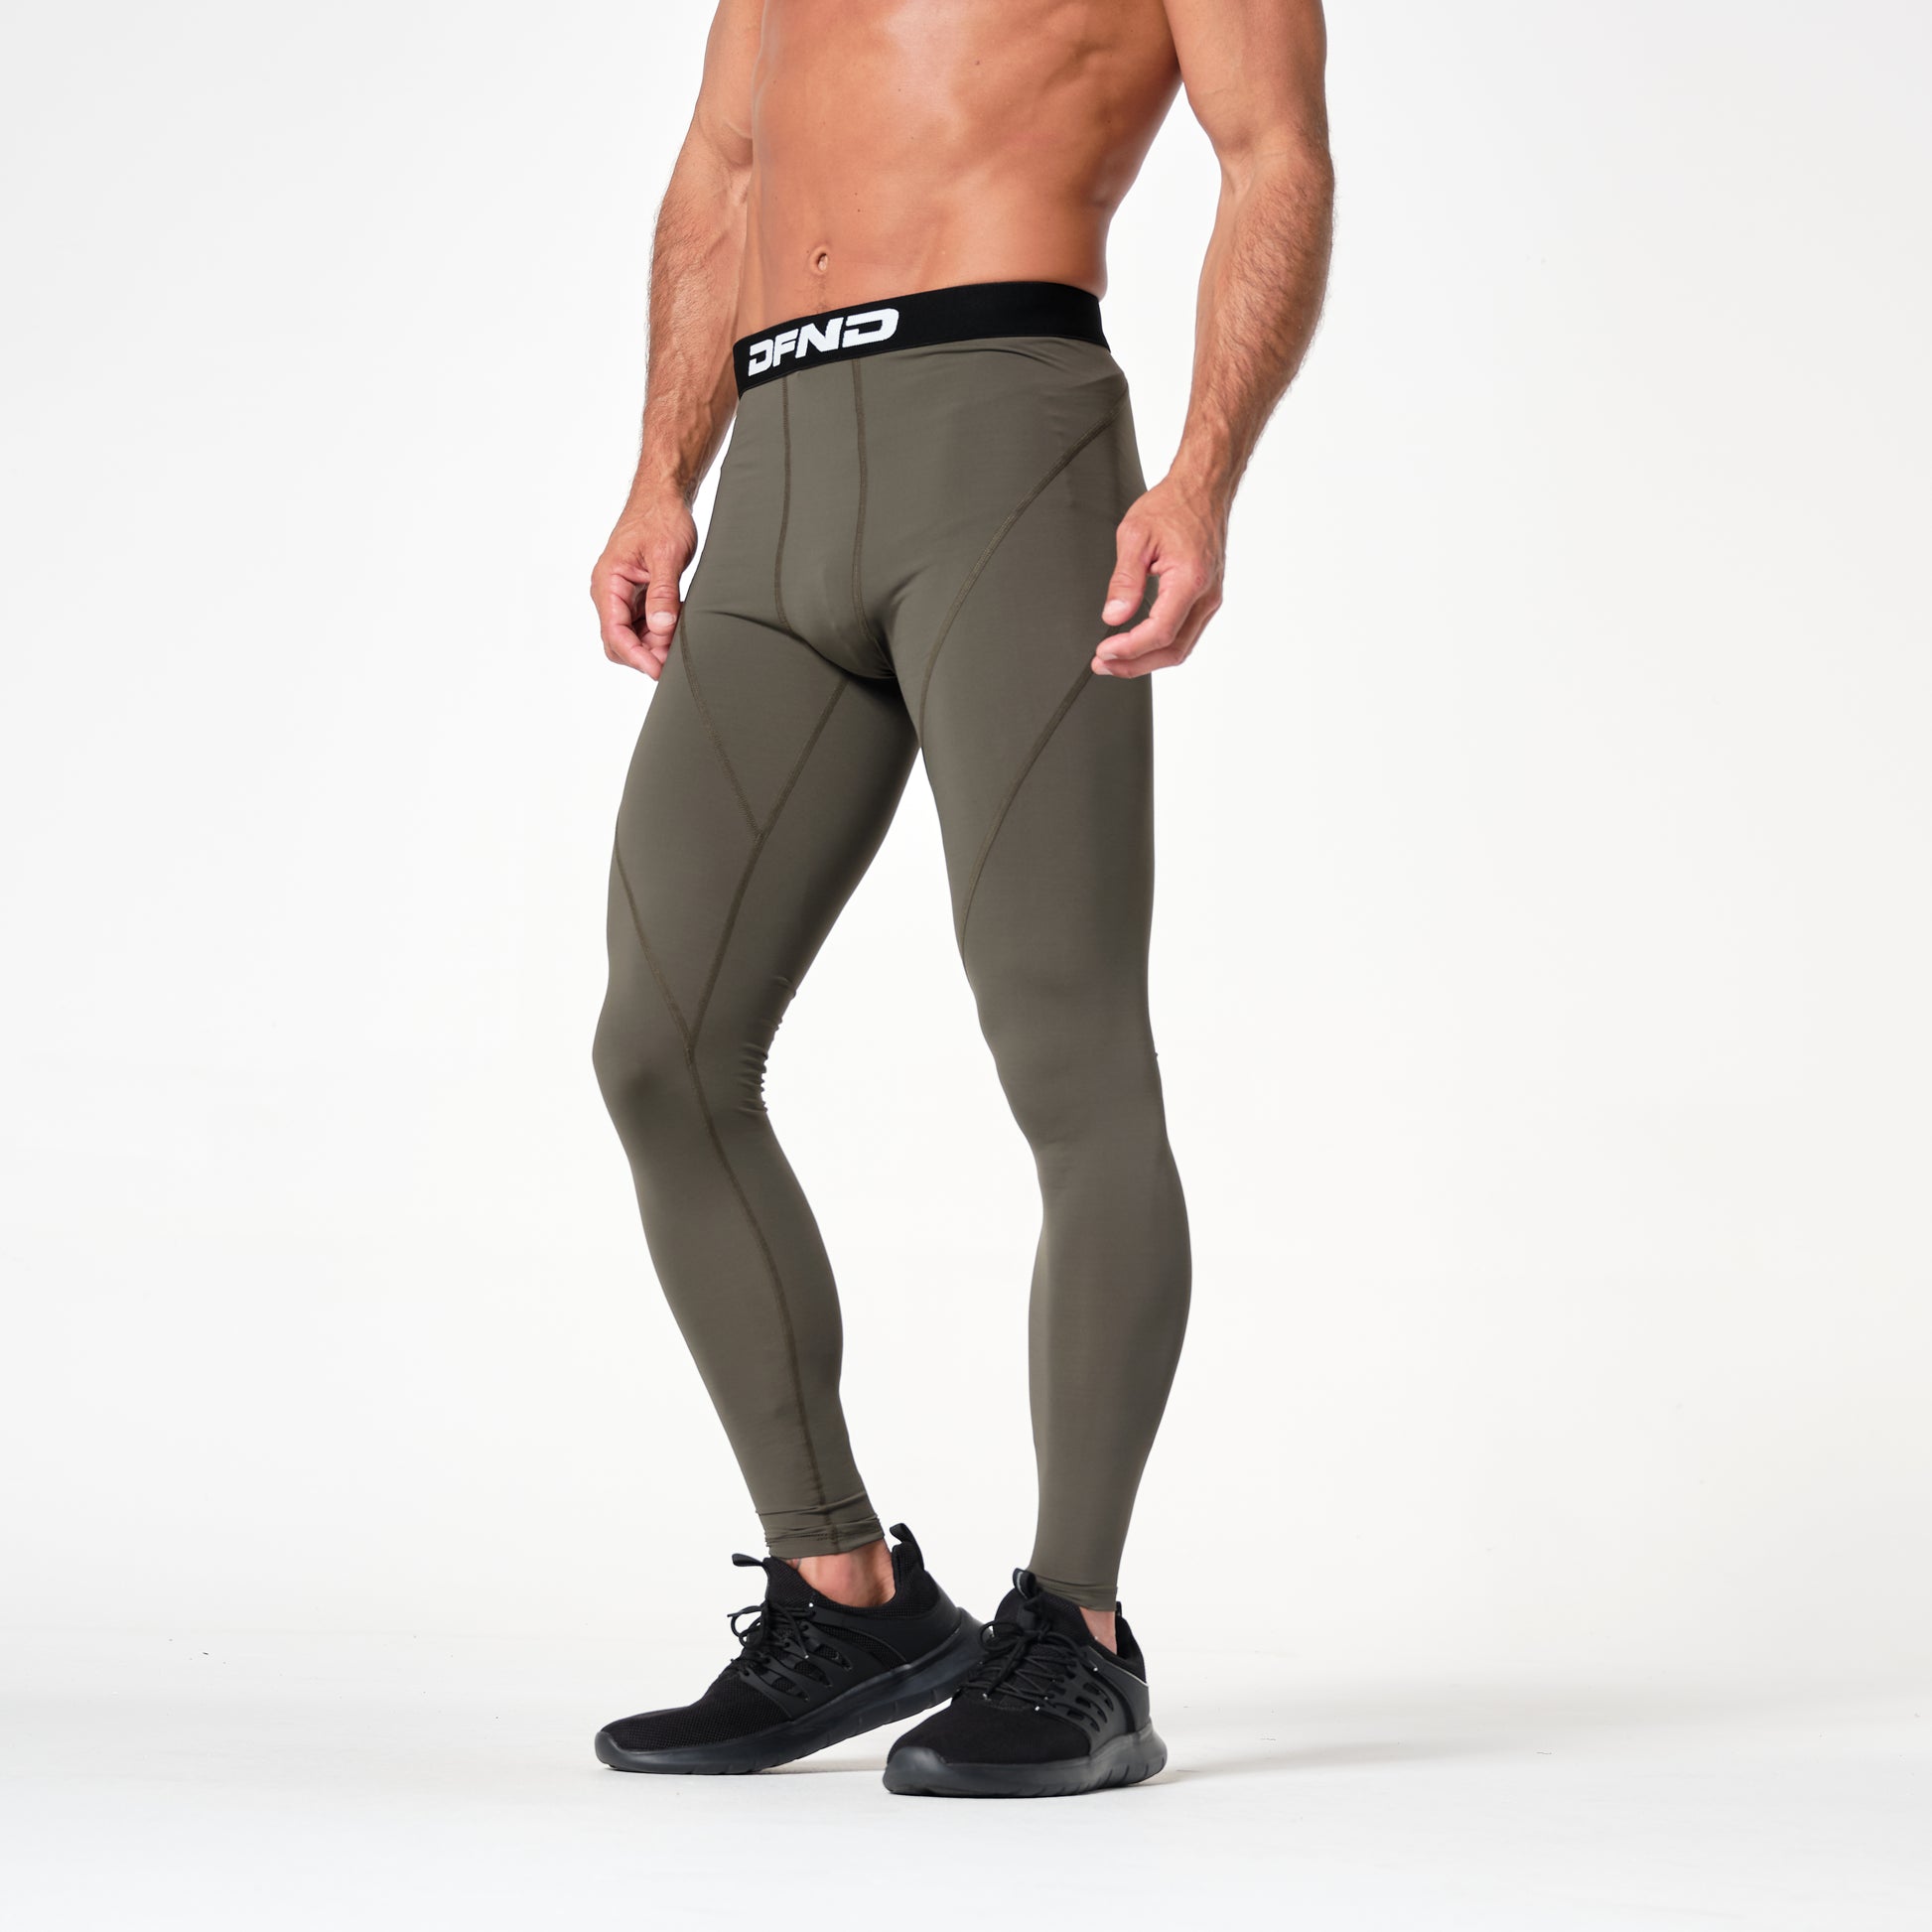 Cotton Spandex Jersey Yoga Pants - American Apparel Style 8300